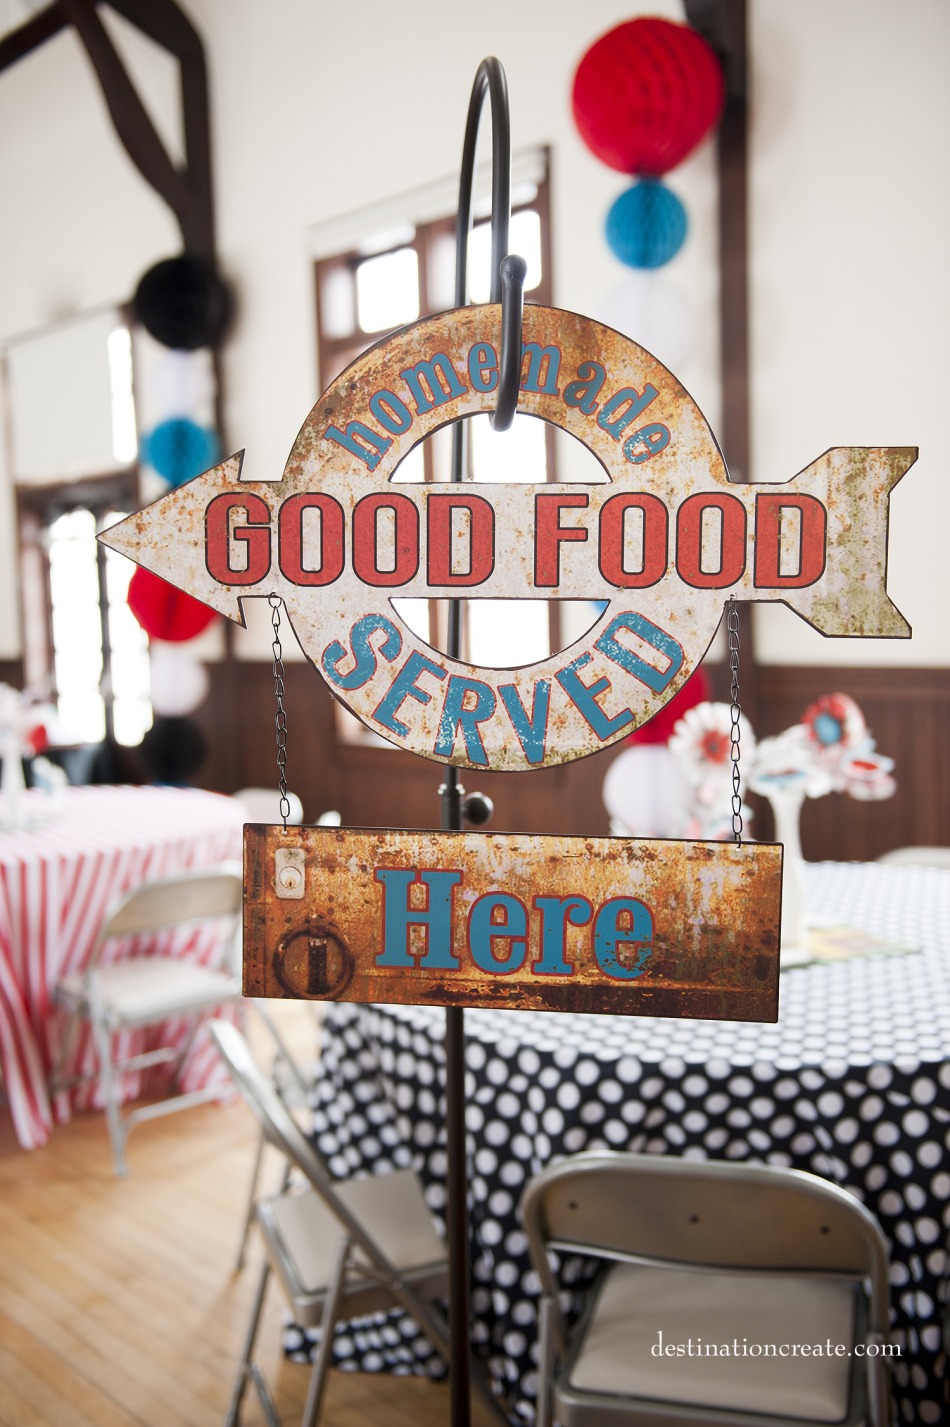 Retro/Vintage Wedding-"Good Food" sign invites guests to enjoy buffet